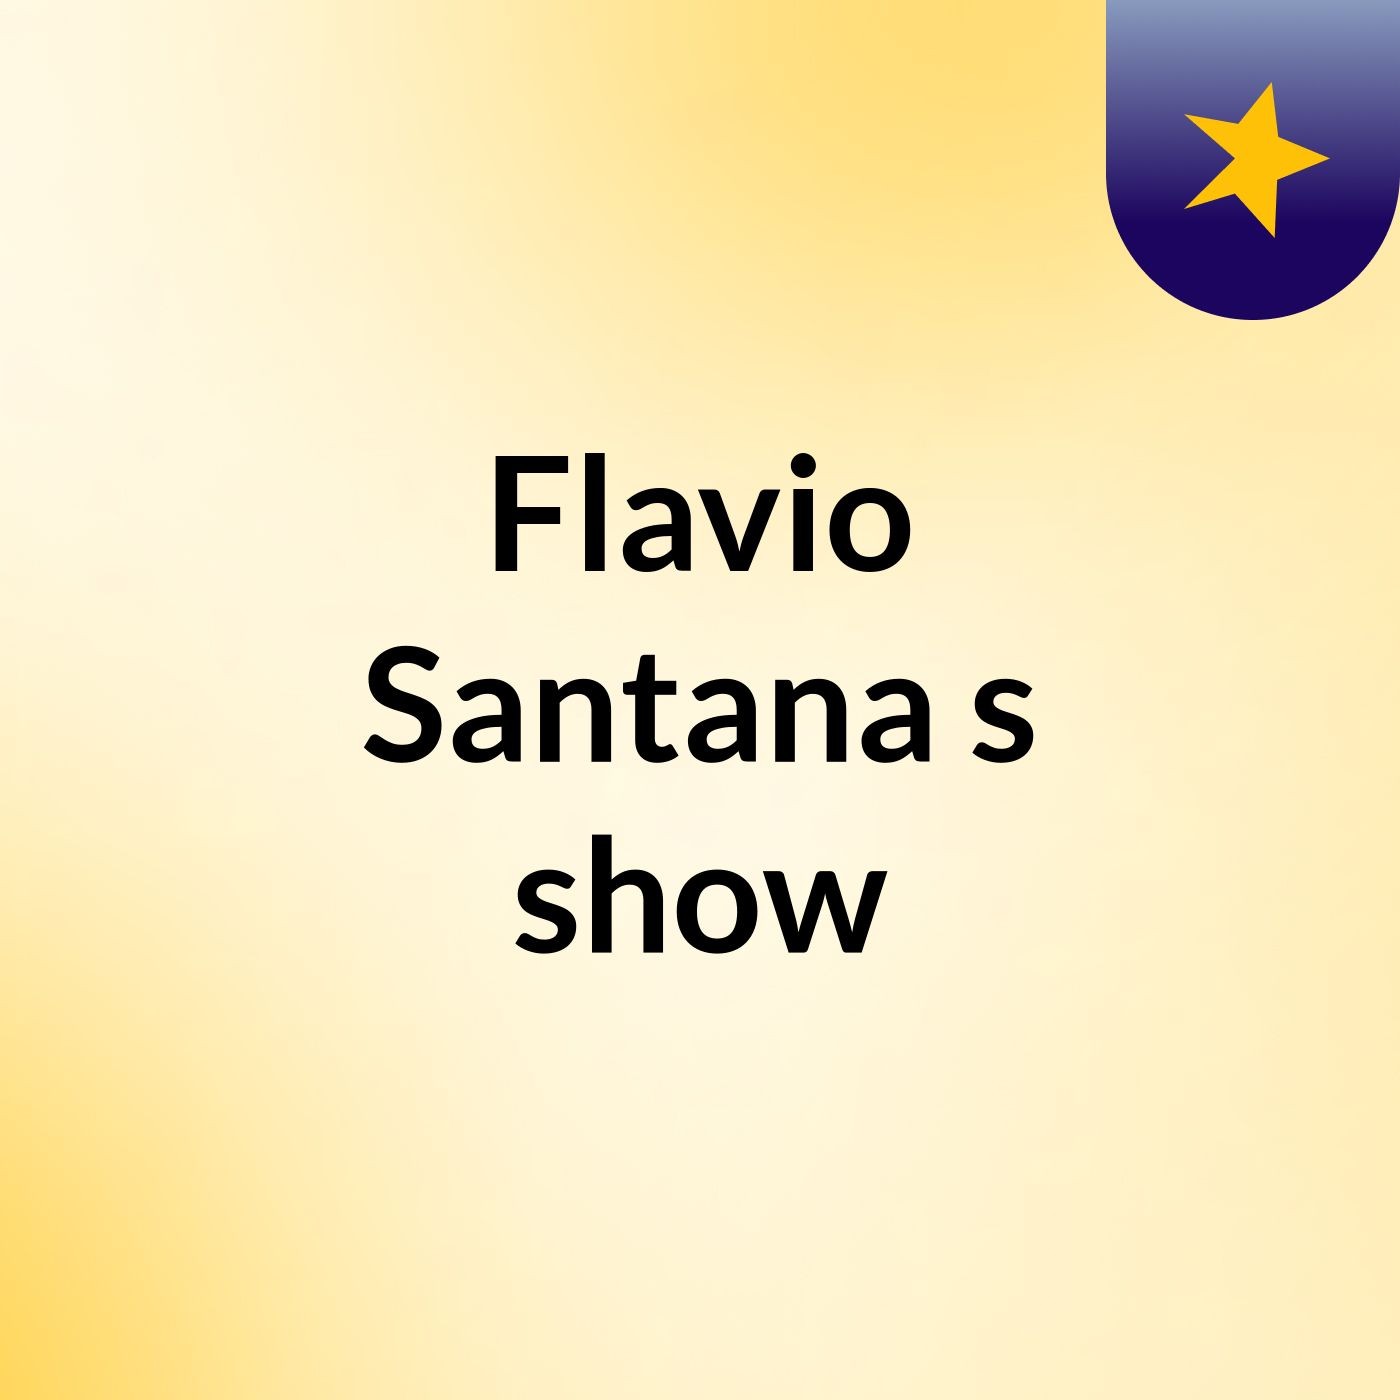 Flavio Santana's show